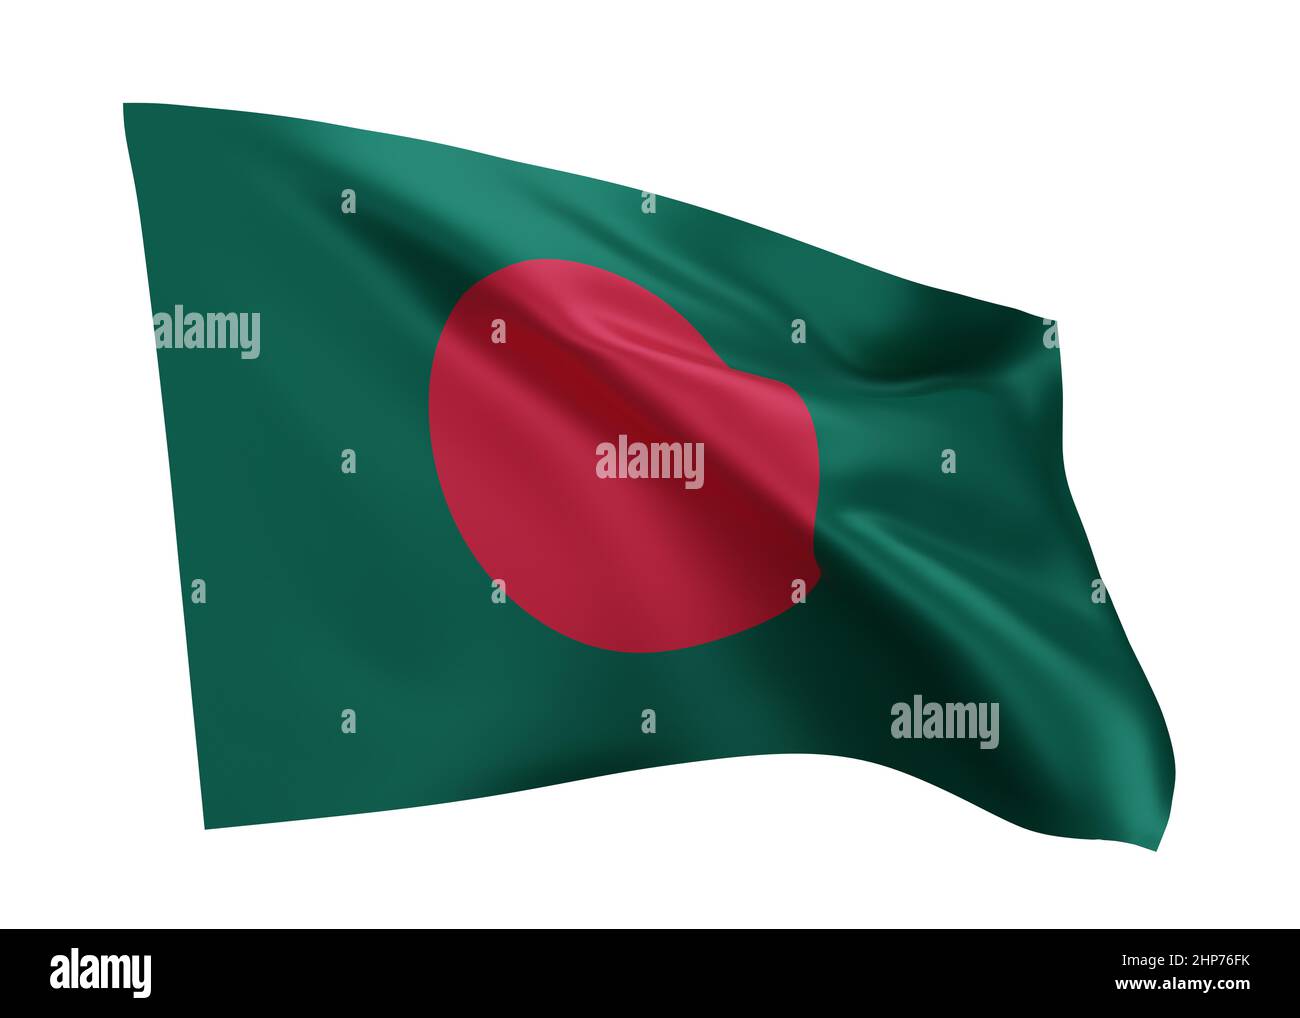 3d illustration flag of Bangladesh. Bangladeshi high resolution flag isolated against white background. 3d rendering Stock Photo